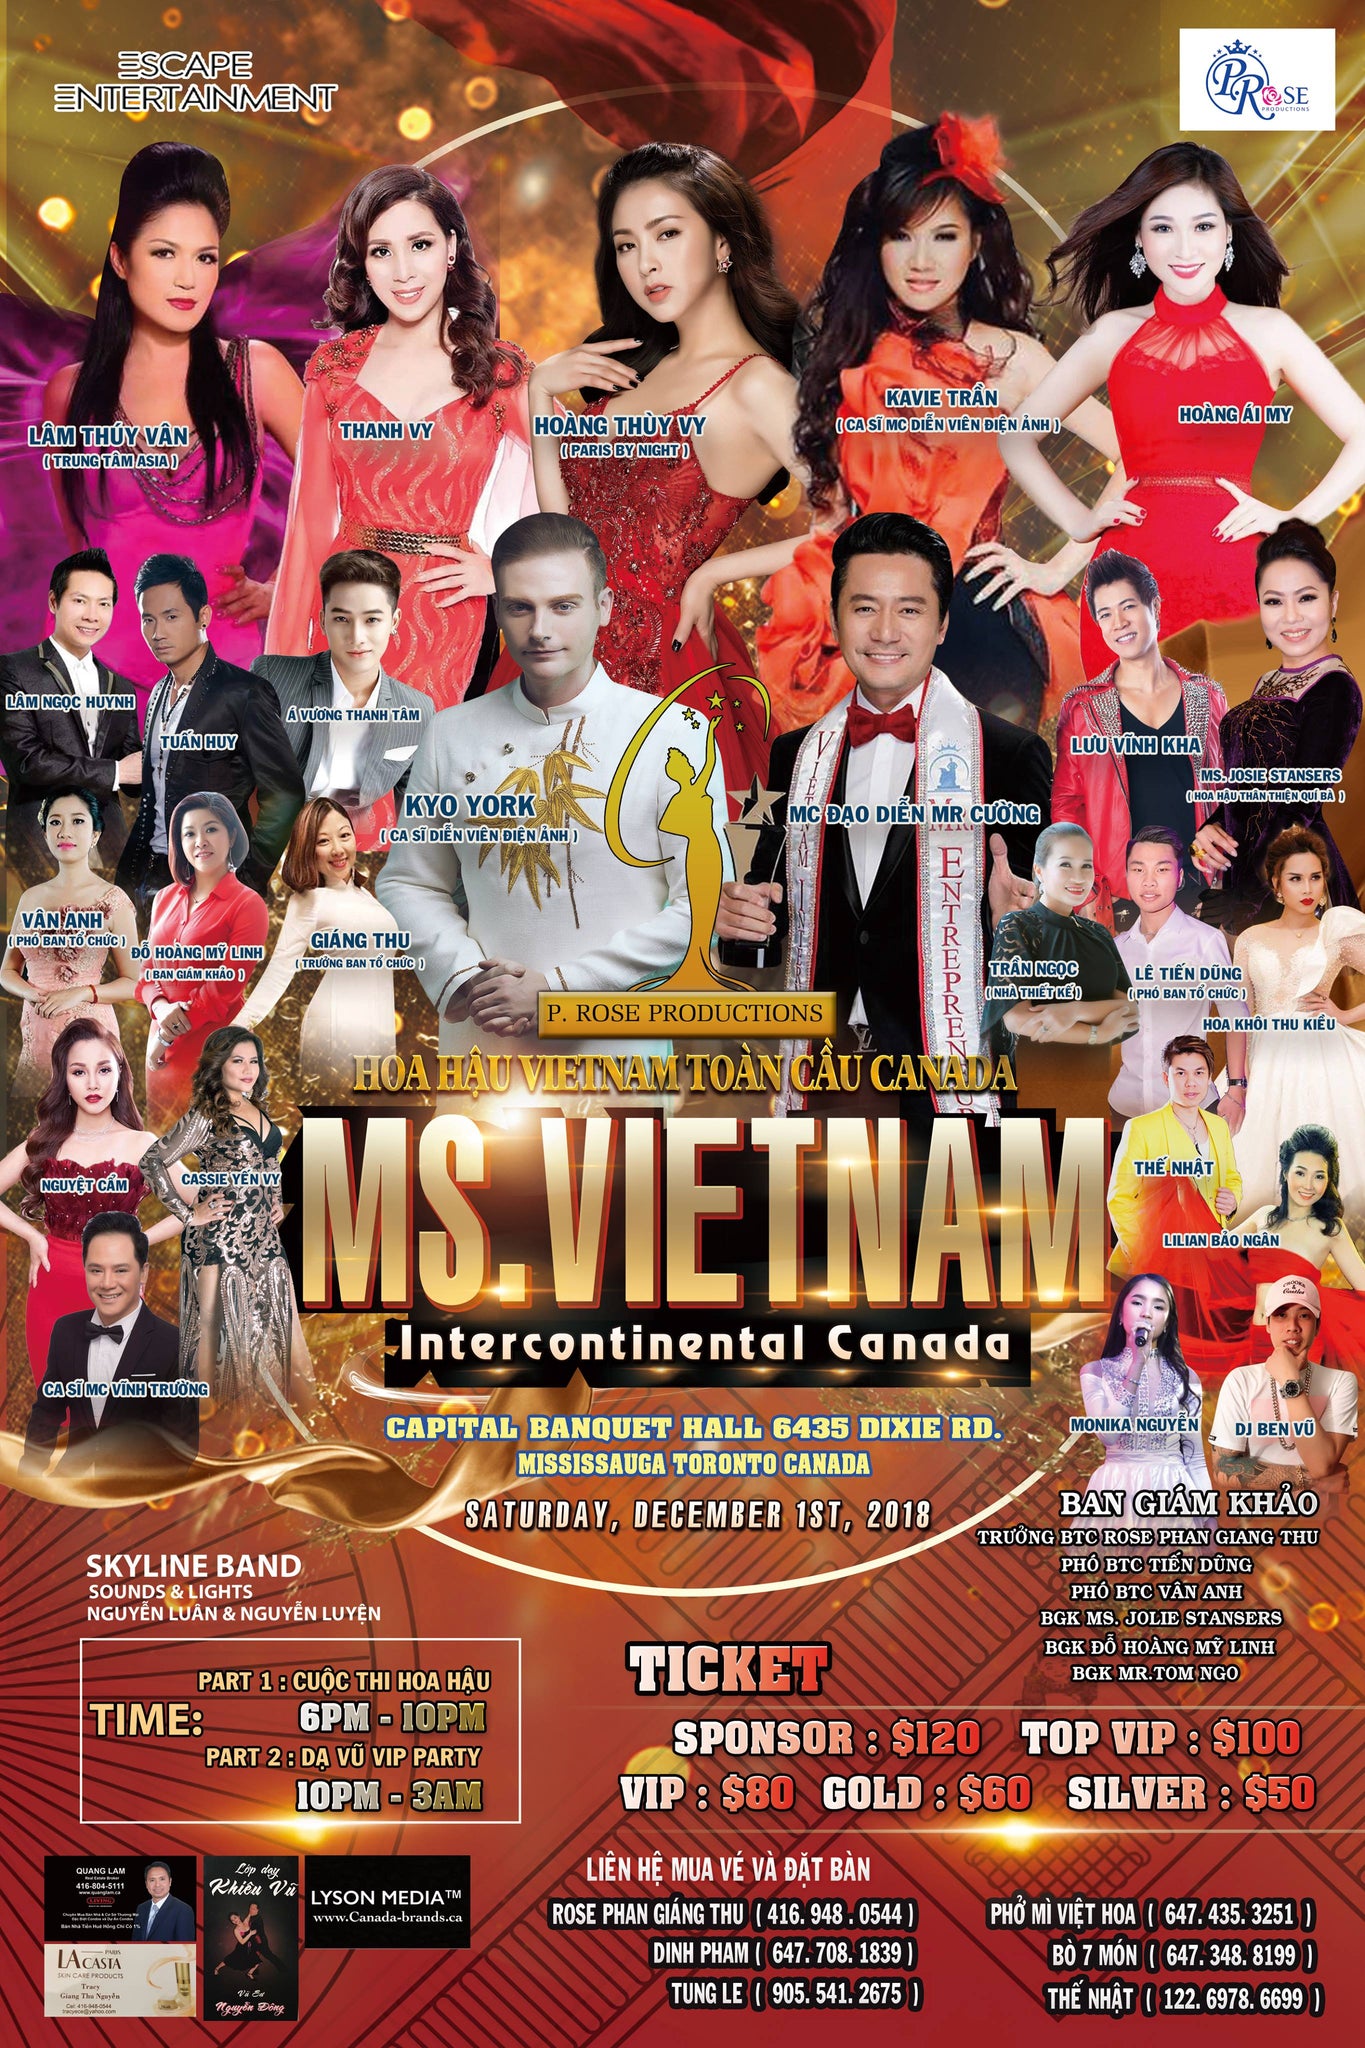 Ms. Vietnam - Intercontinental Canada in Toronto 2018